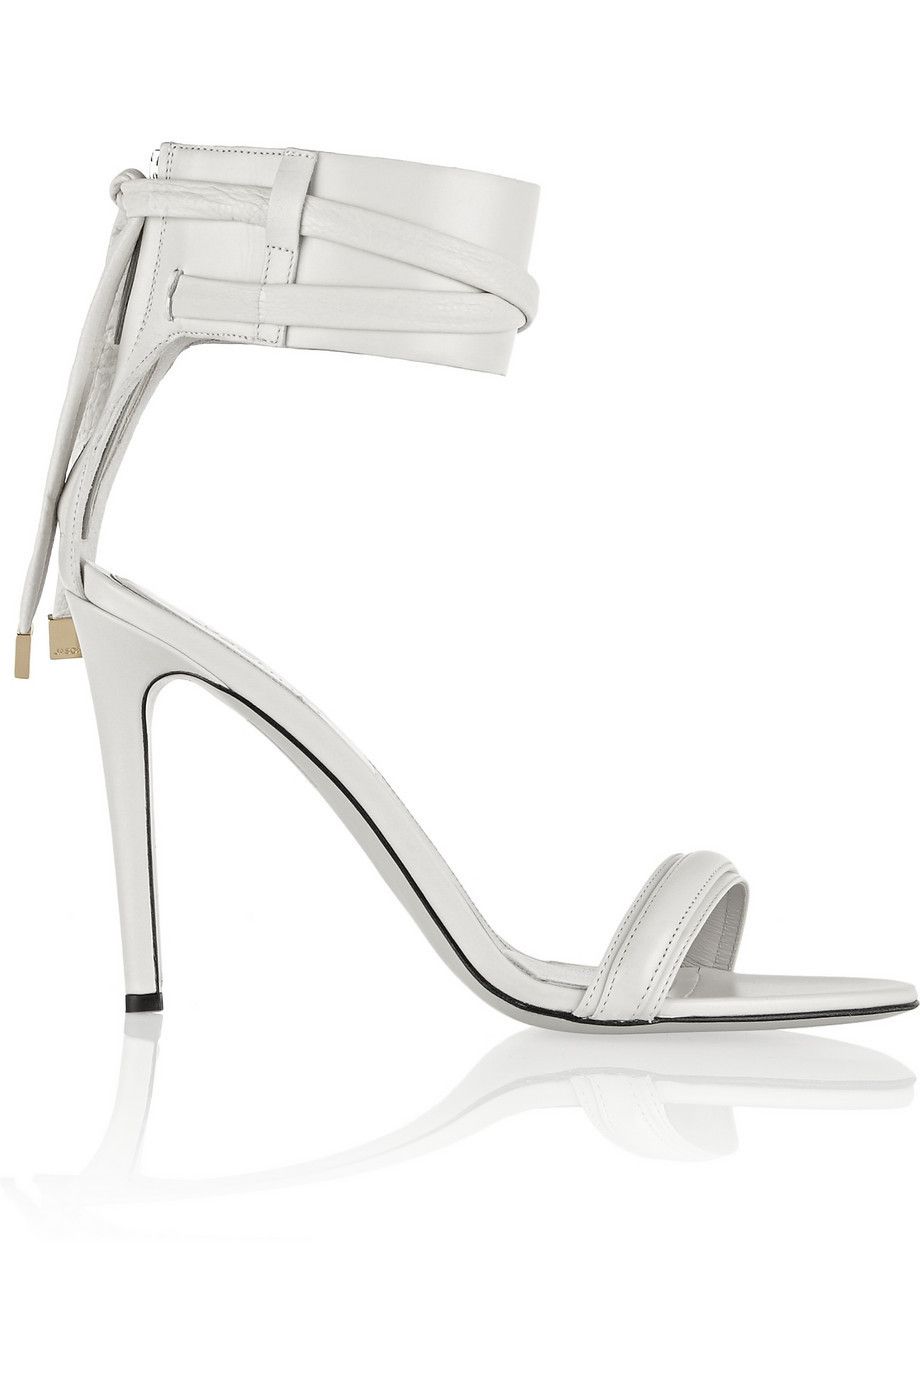 High heels, White, Sandal, Grey, Basic pump, Beige, Bridal shoe, Dancing shoe, Material property, Foot, 